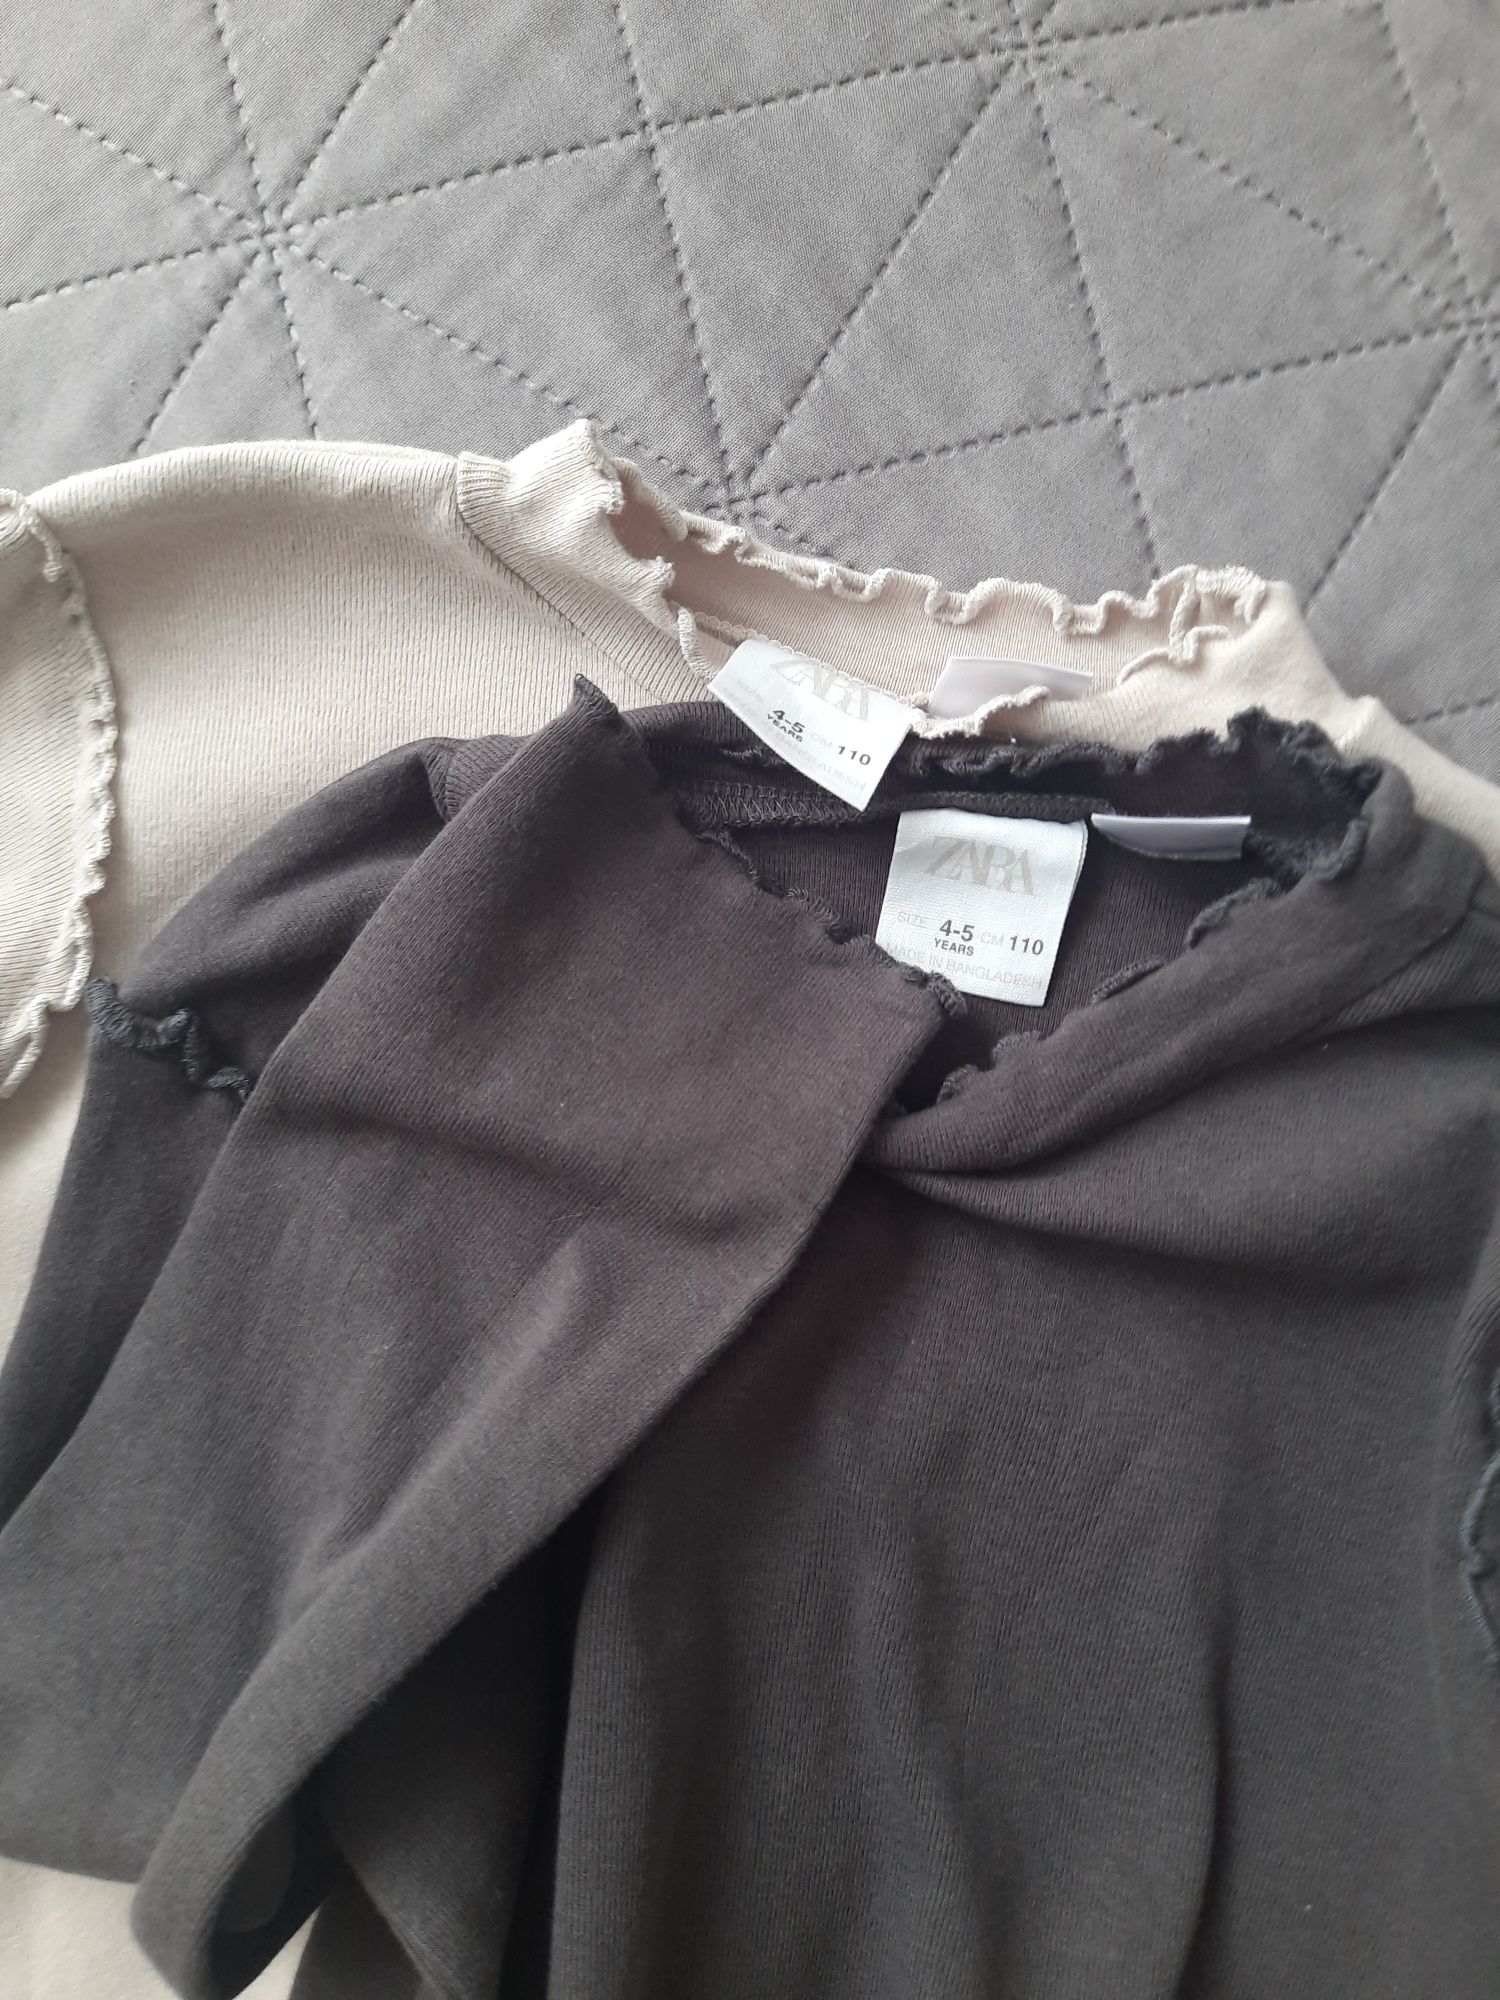 Zestaw Zara/Reserved bluzki, koszula